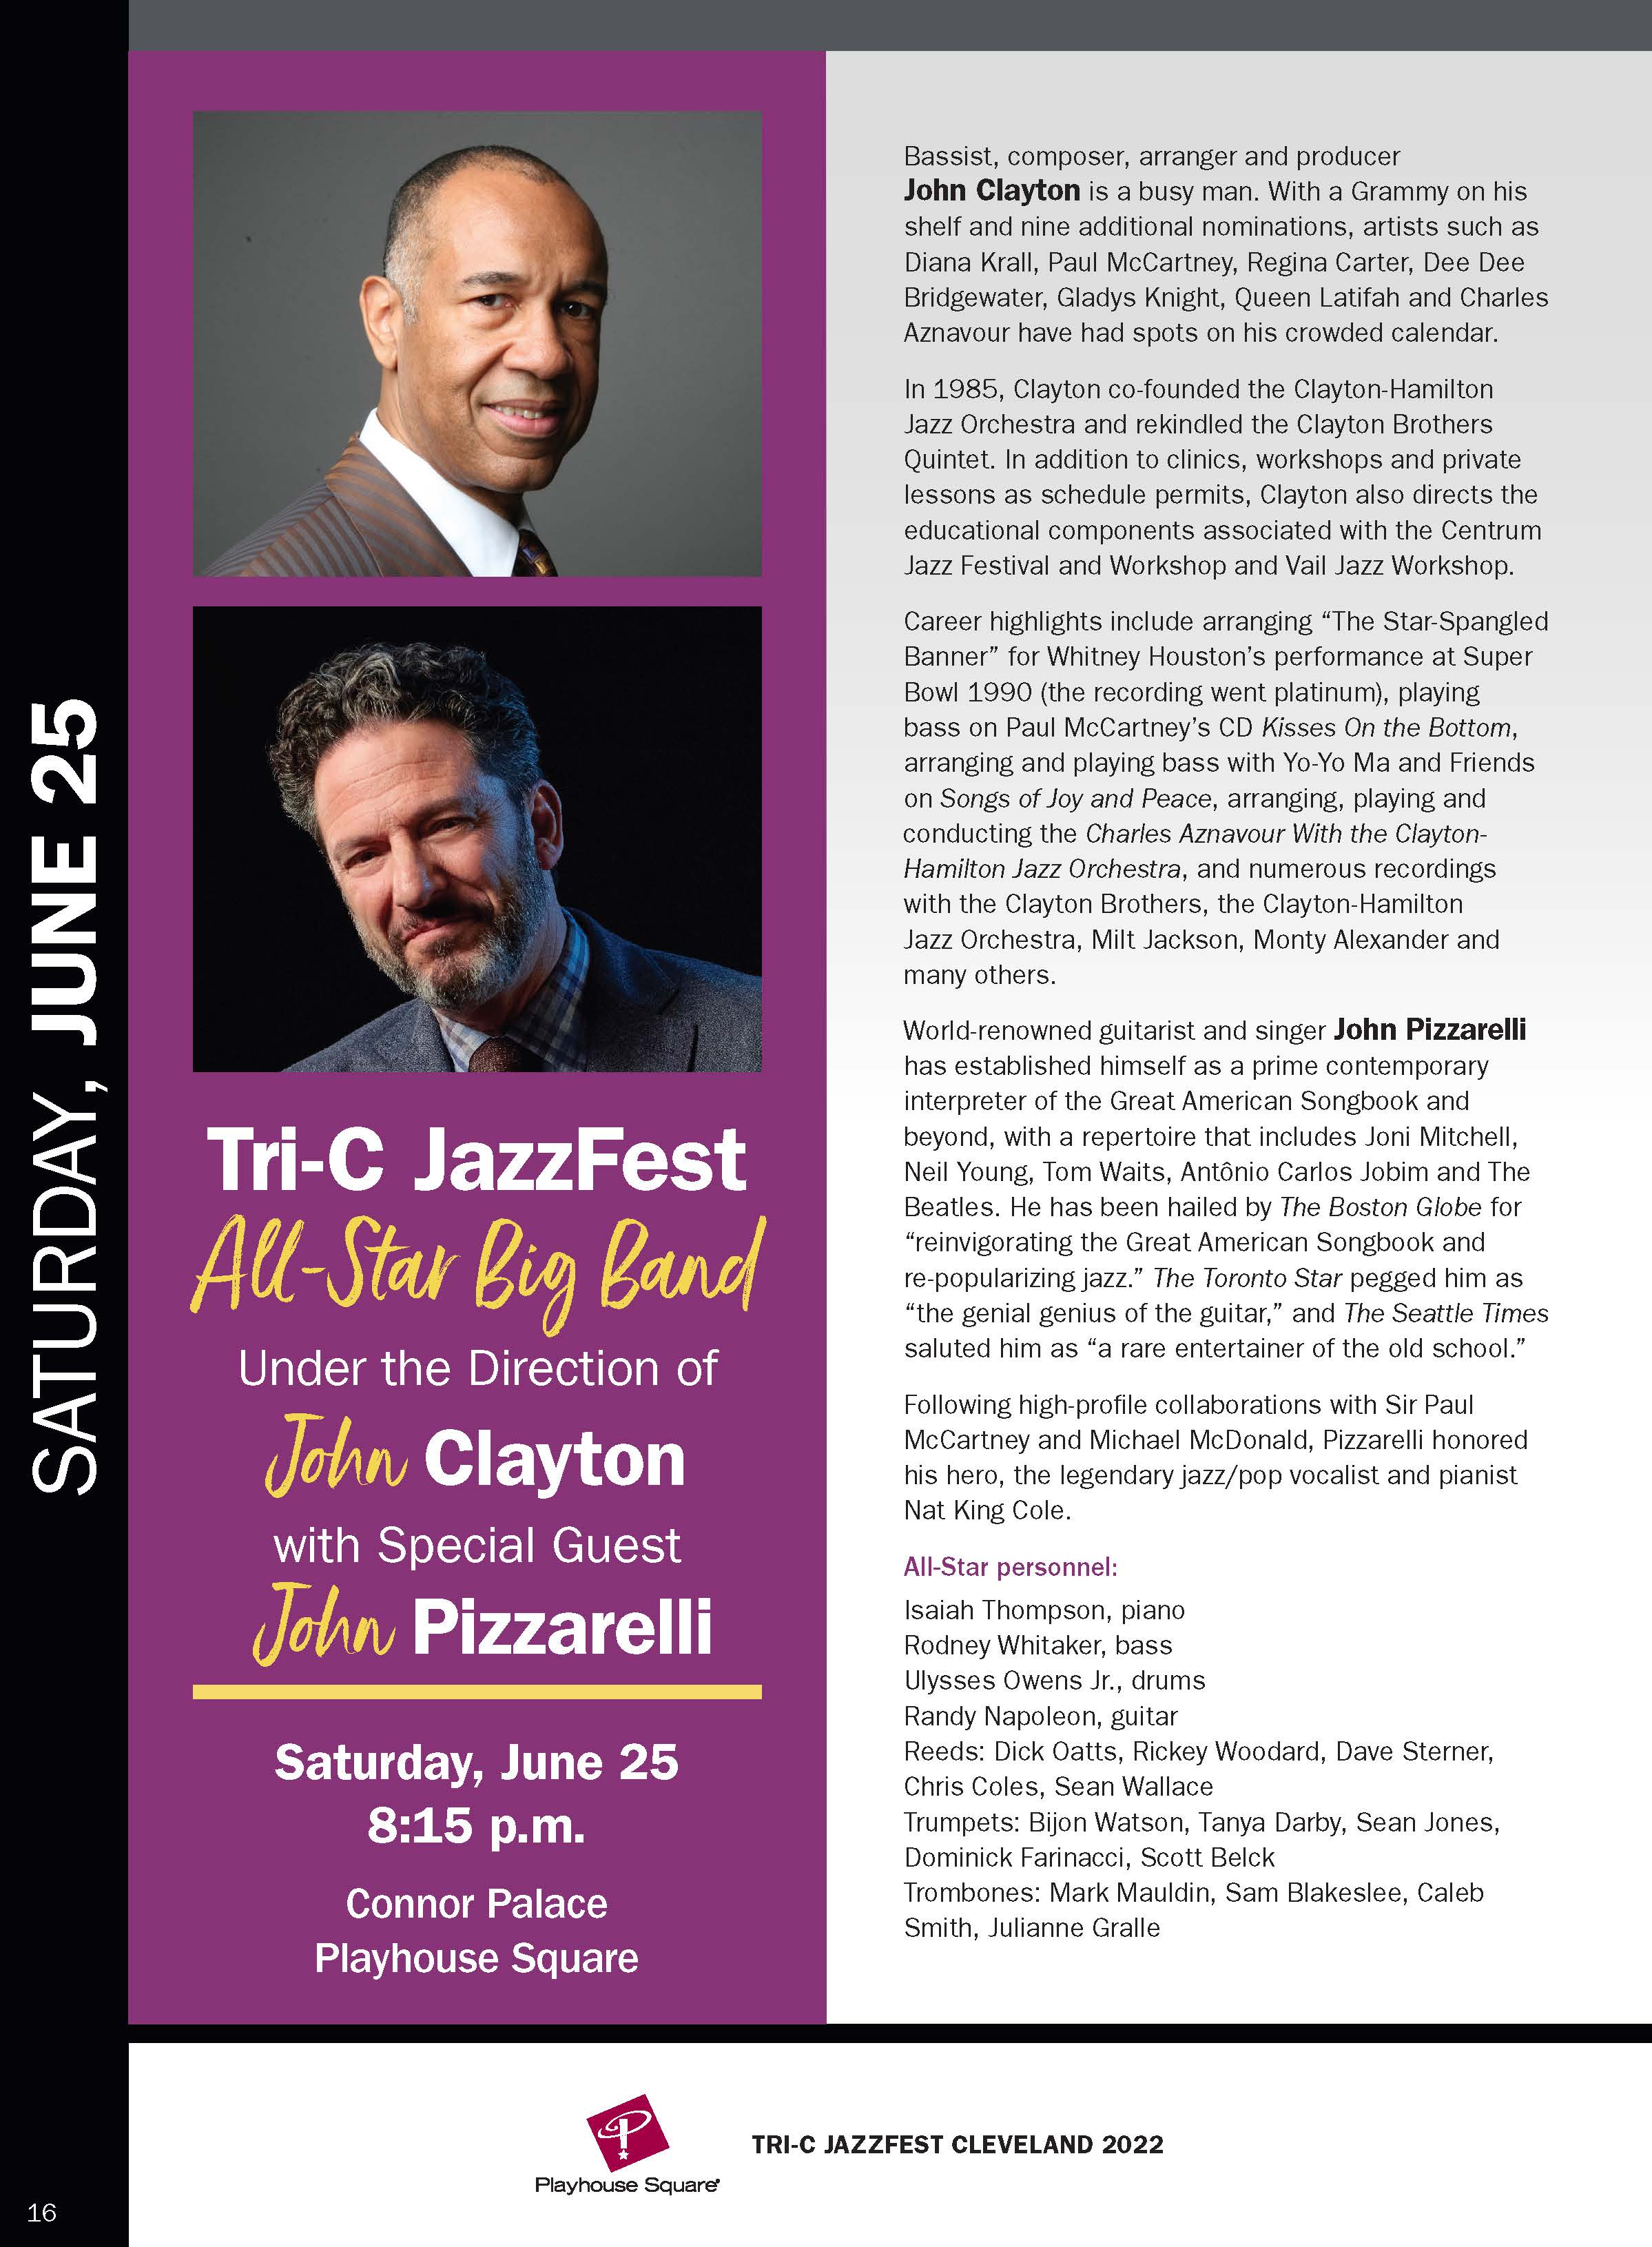 John Pizzarelli biography from the JazzFest program